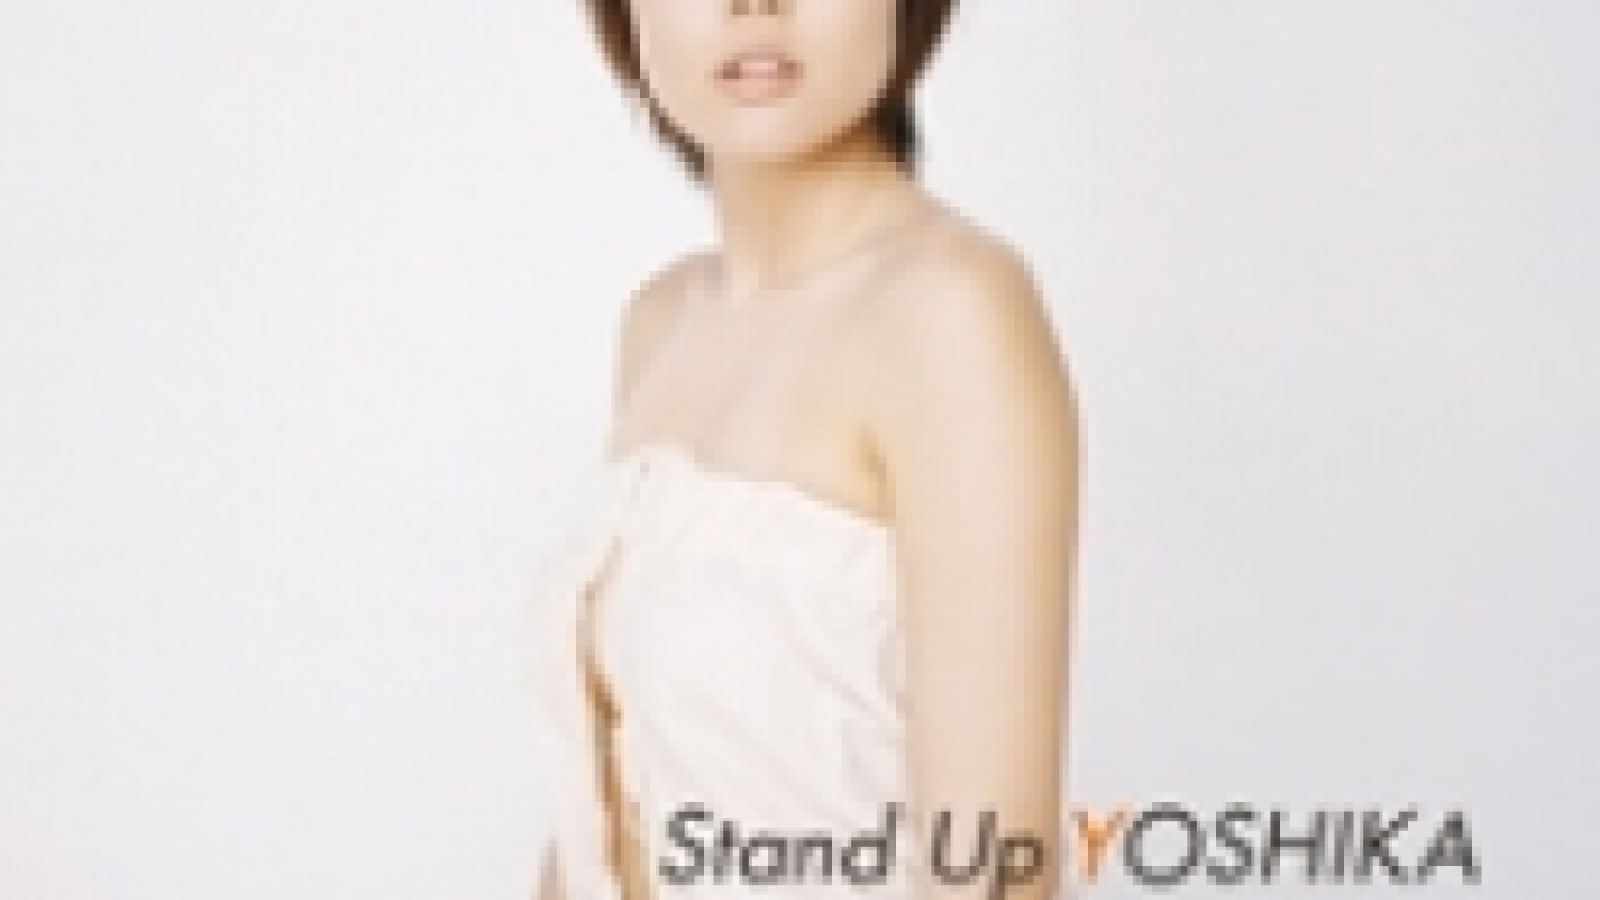 YOSHIKA - Stand Up © 2013 K/ioon Music Inc. Provided by E-TALENTBANK.